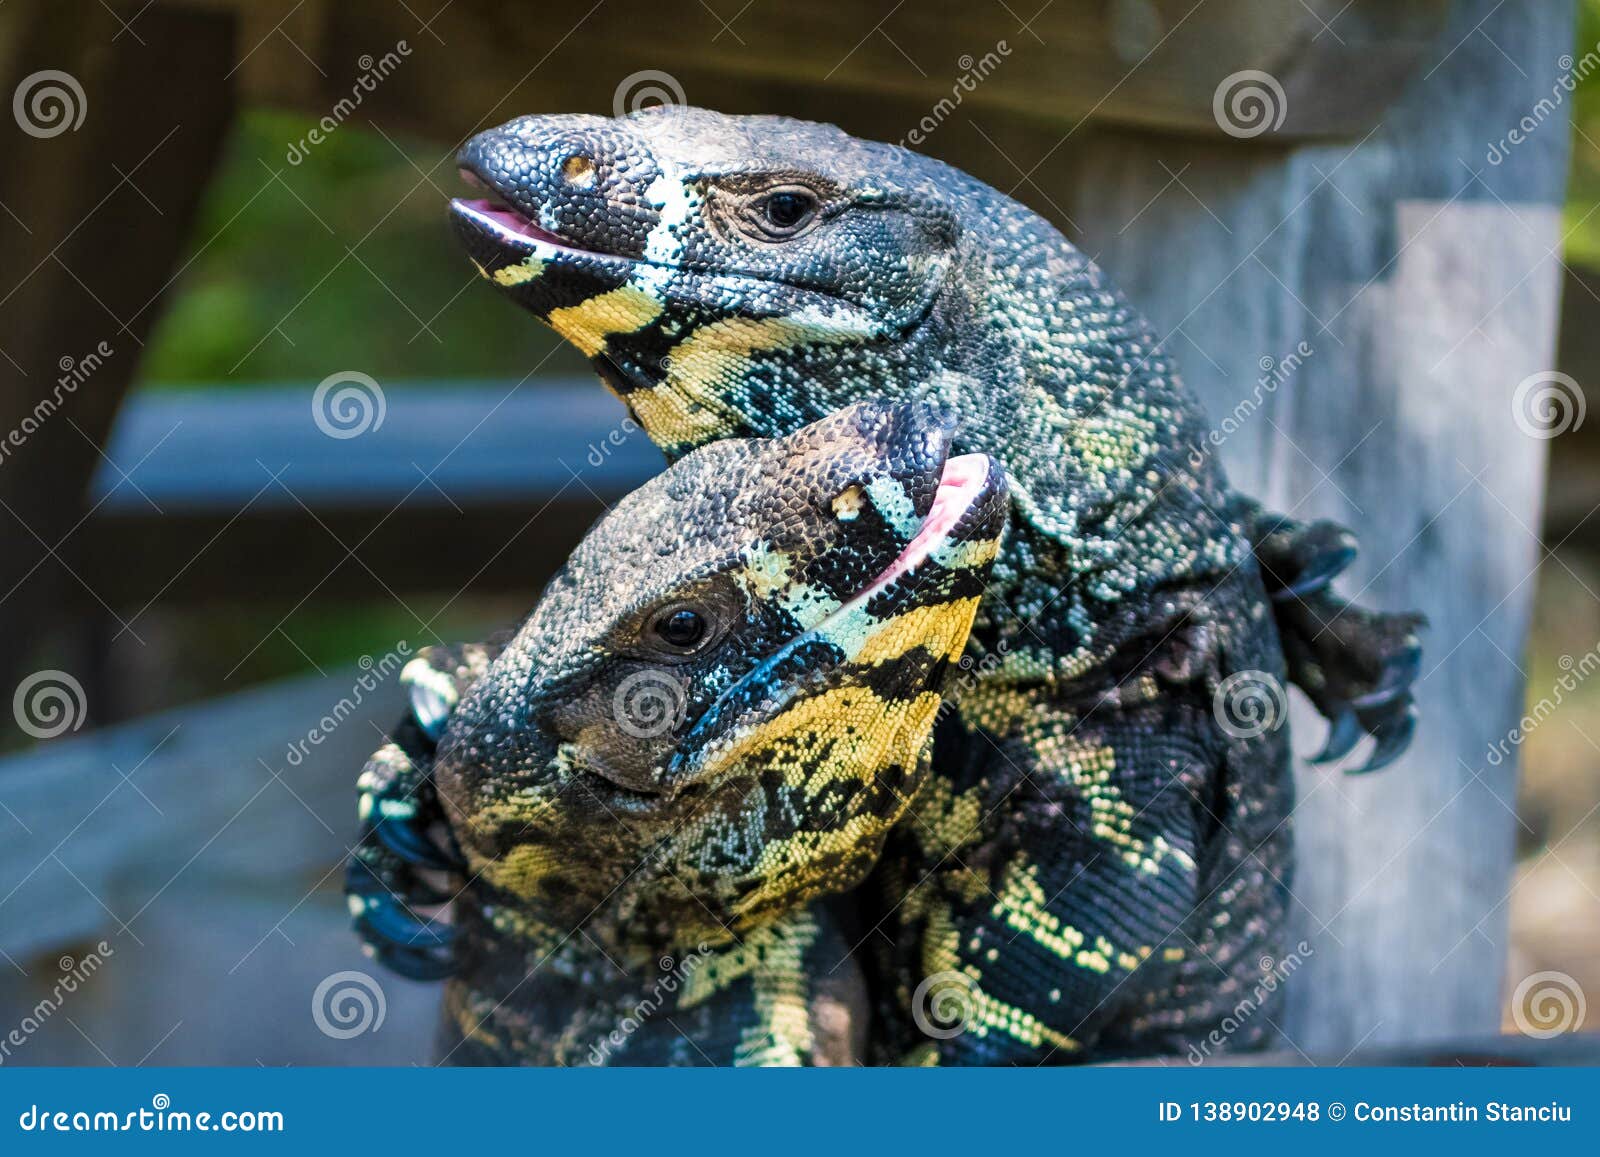 Two Goannas, Australian Monitor Lizards Fighting Ferociously Stock Photo - Image of aggression, head: 138902948